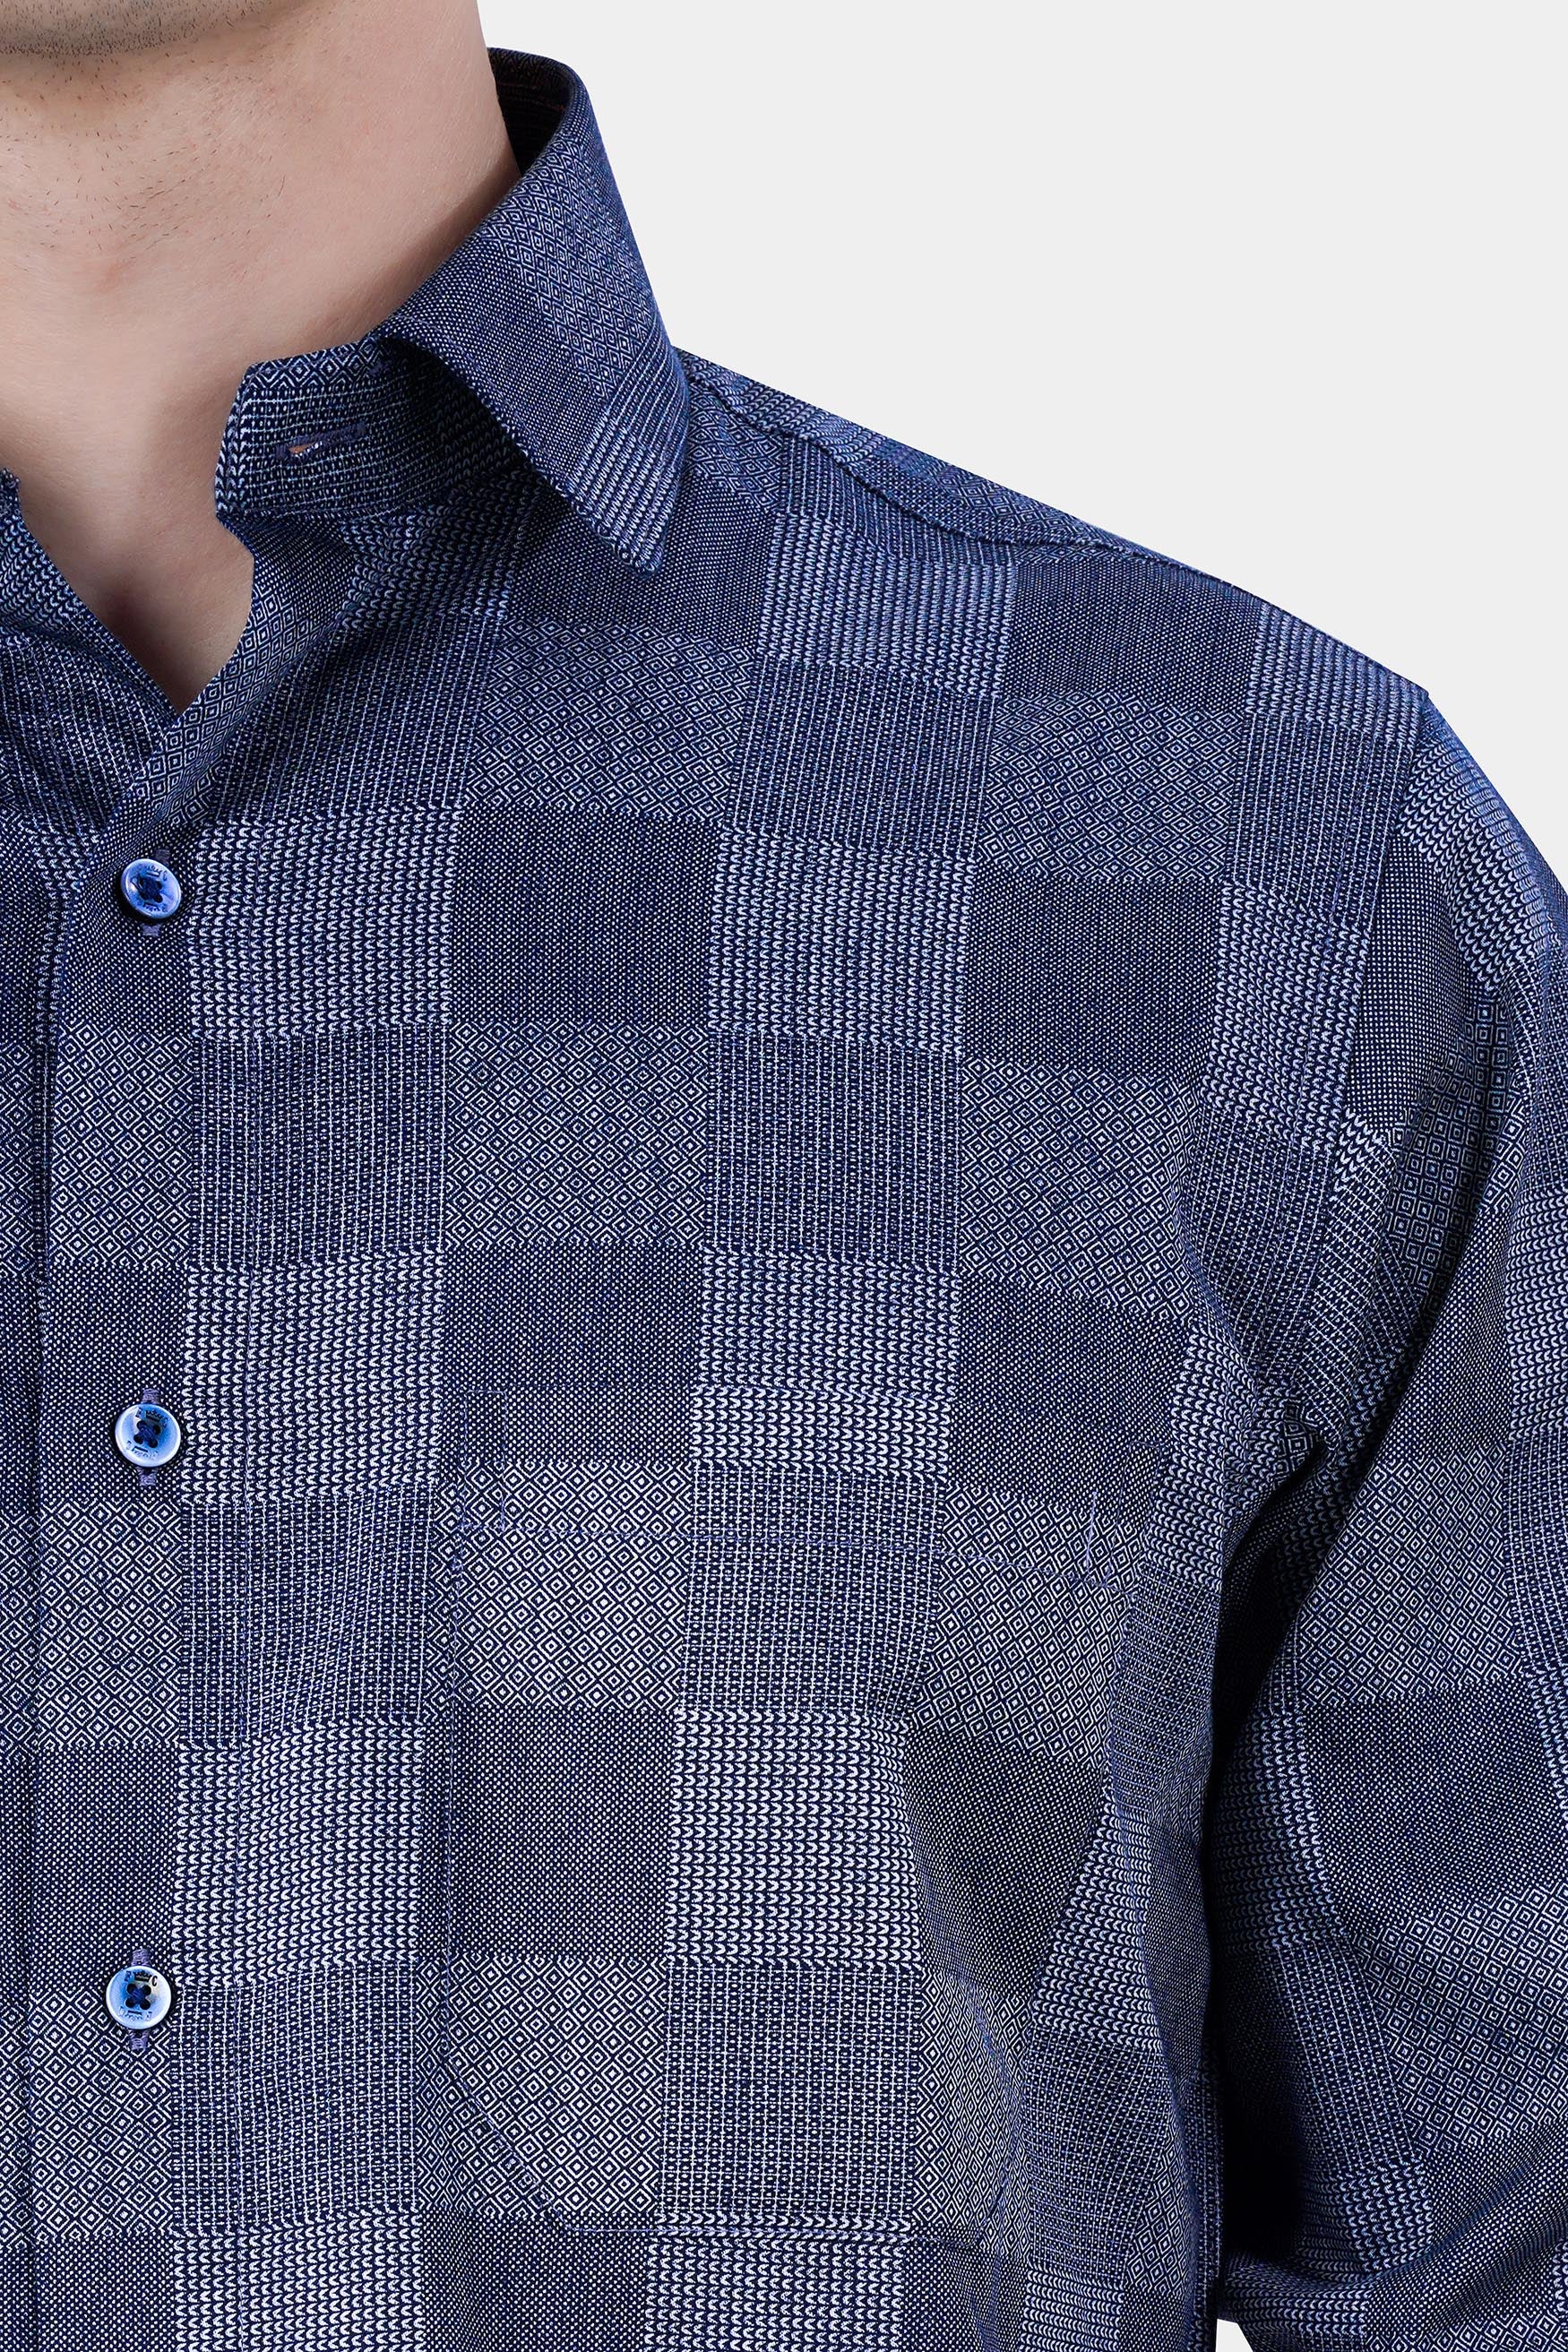 Ebony Clay Blue and Wisteria Gray Tile Printed Subtle Sheen Super Soft Premium Cotton Shirt